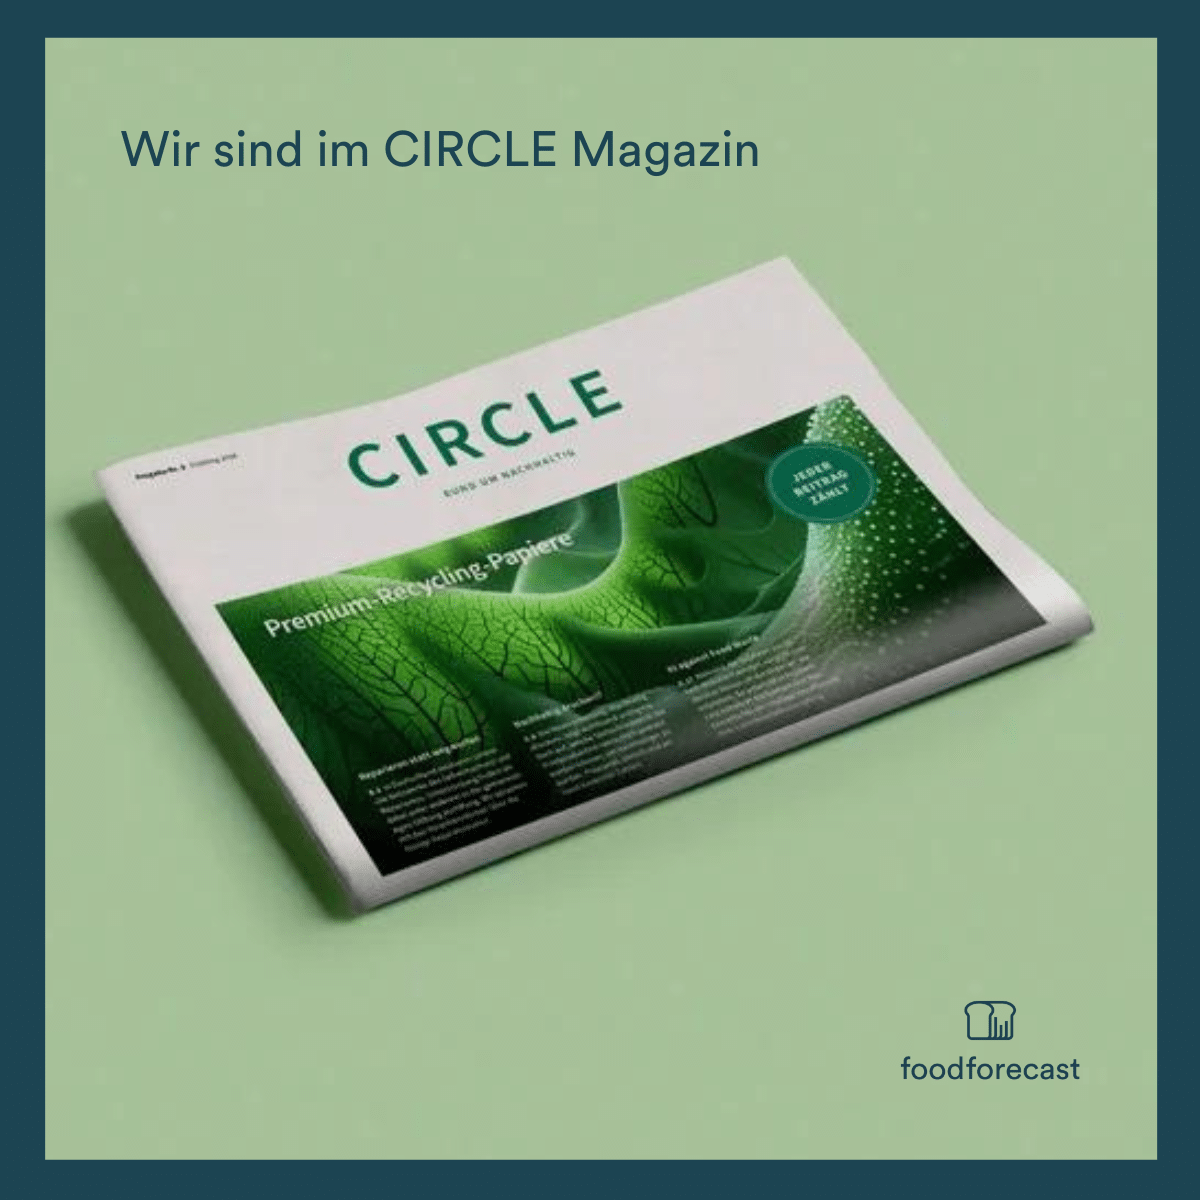 Featured image for “Wir sind im CIRCLE Magazin”